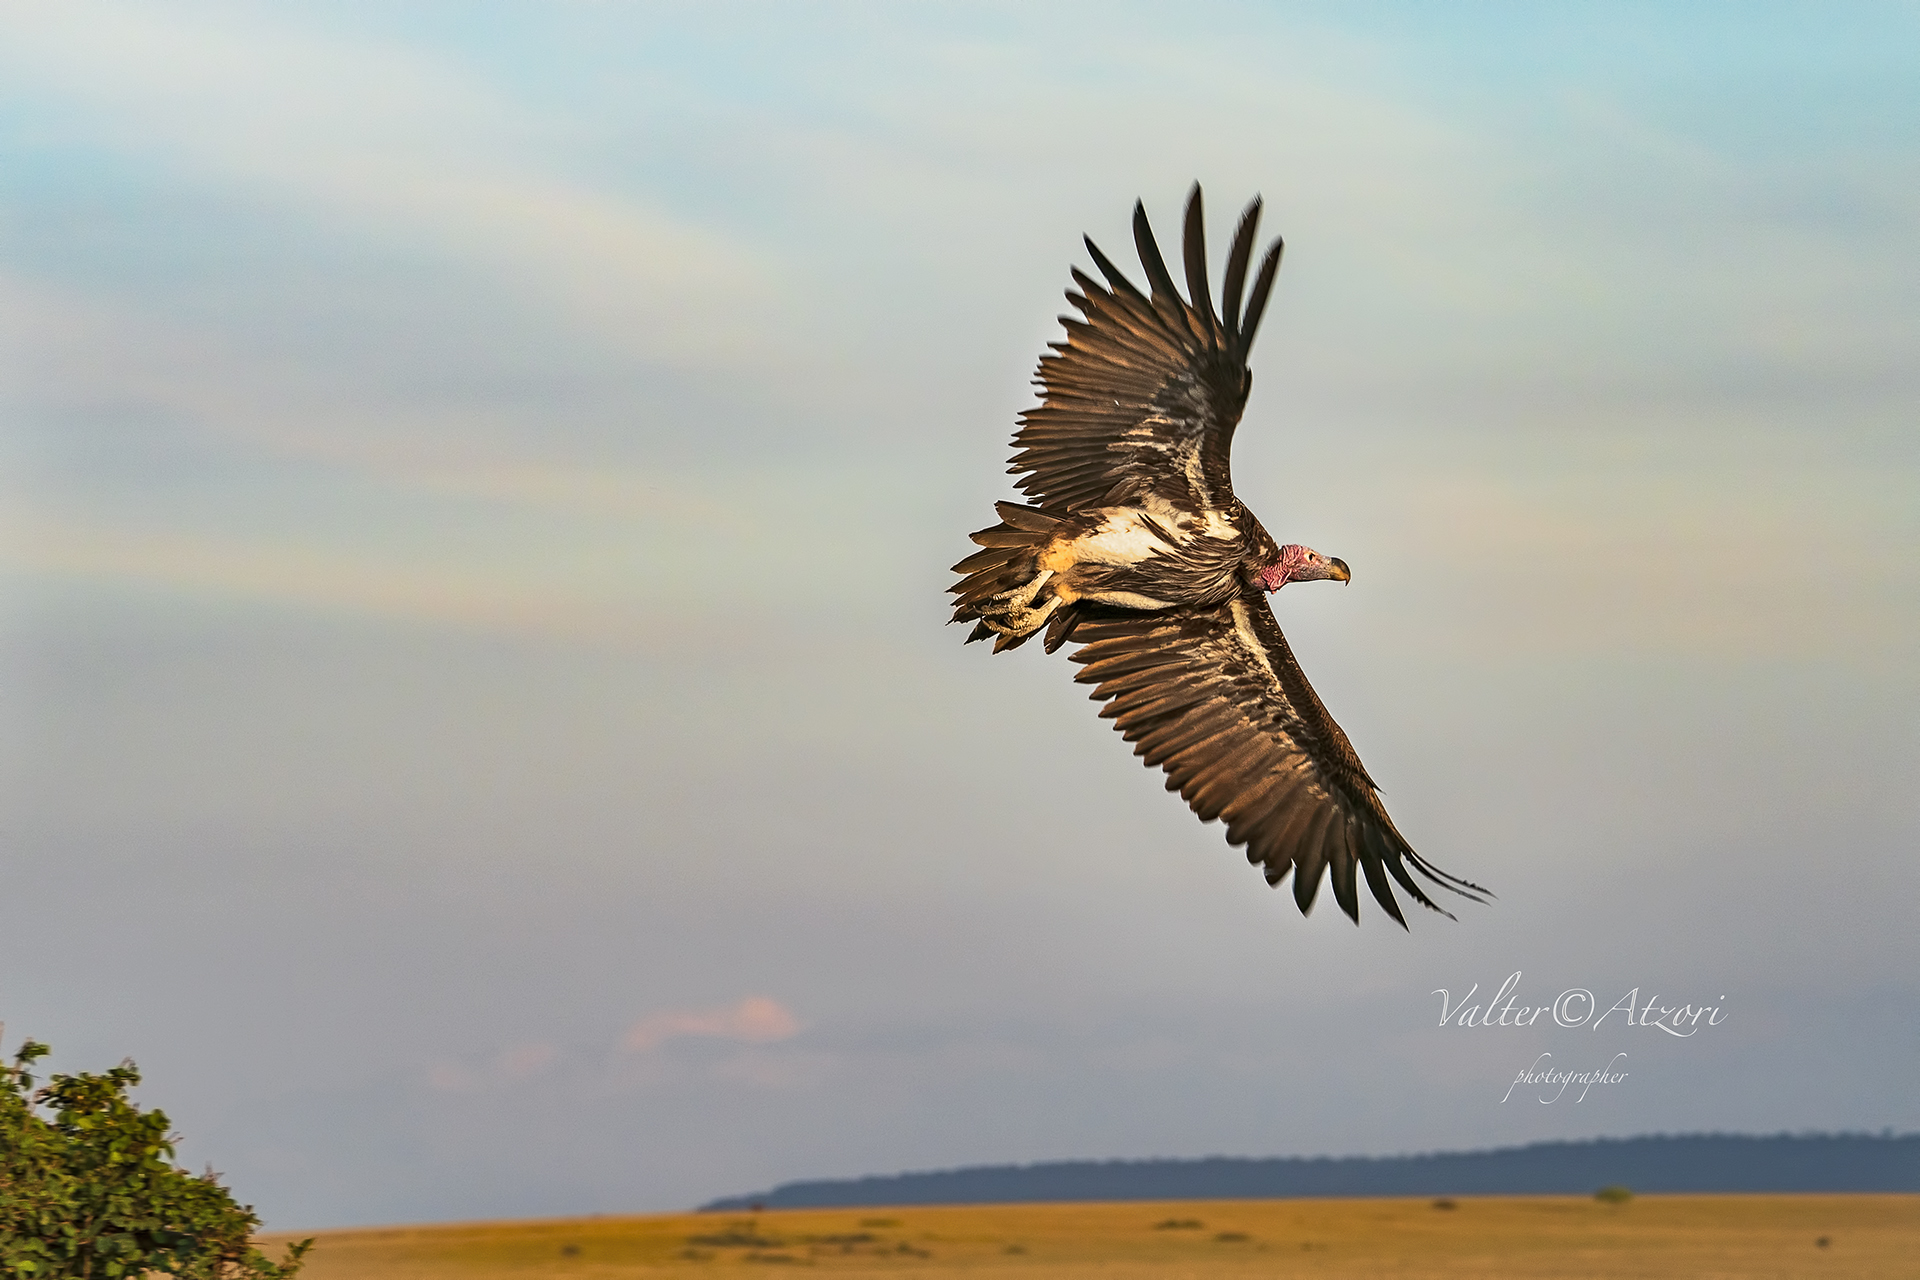 The Vulture's Flight...